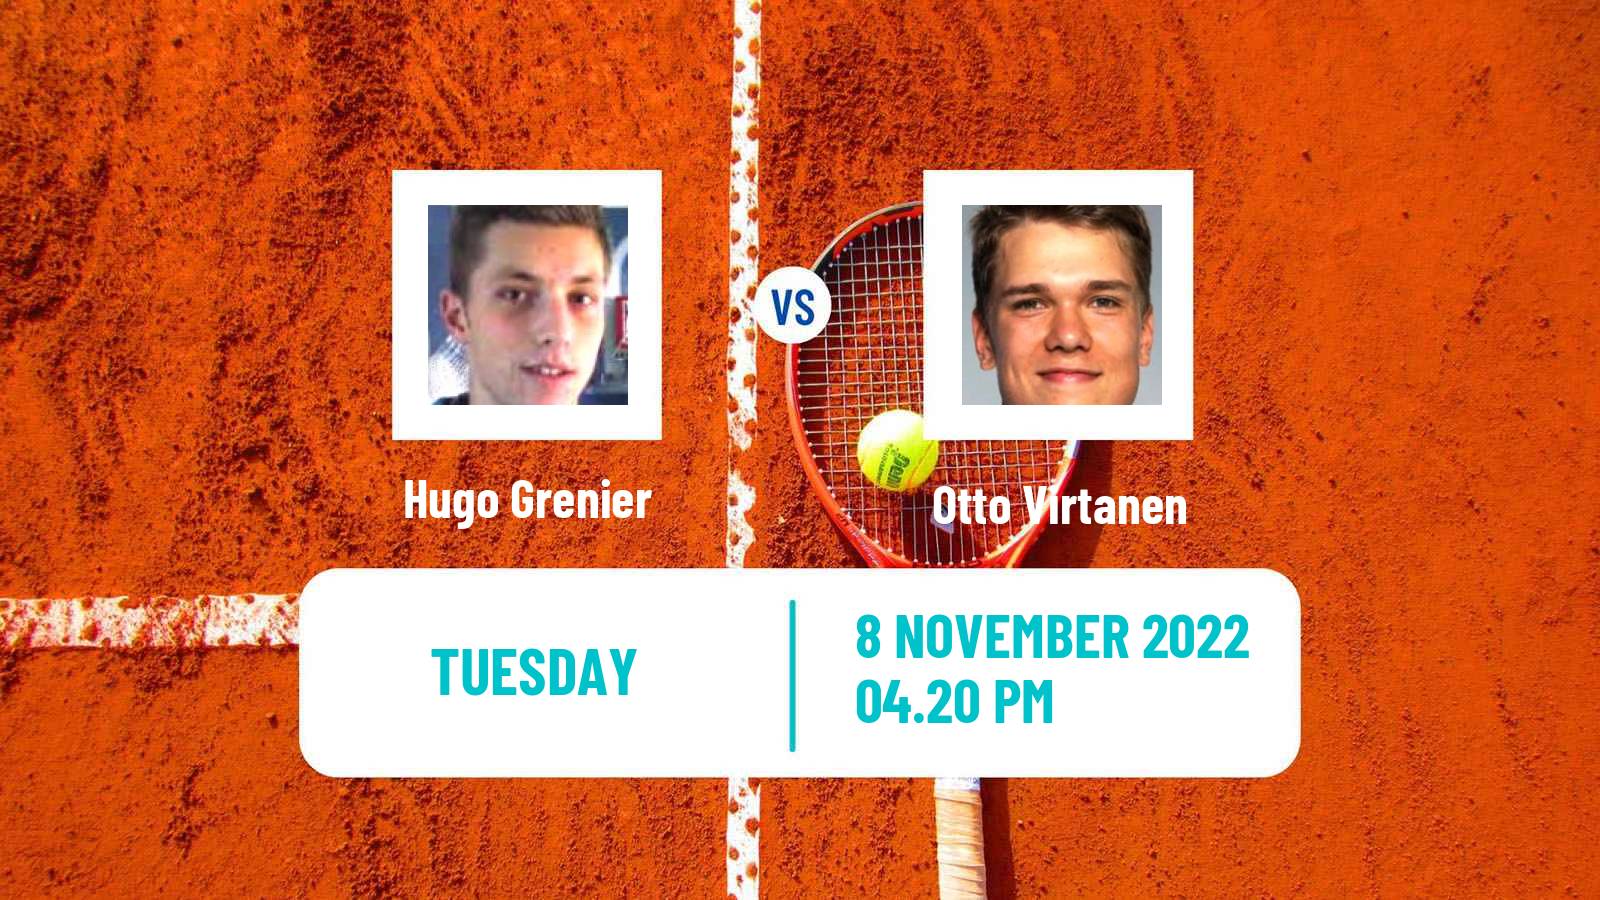 Tennis ATP Challenger Hugo Grenier - Otto Virtanen